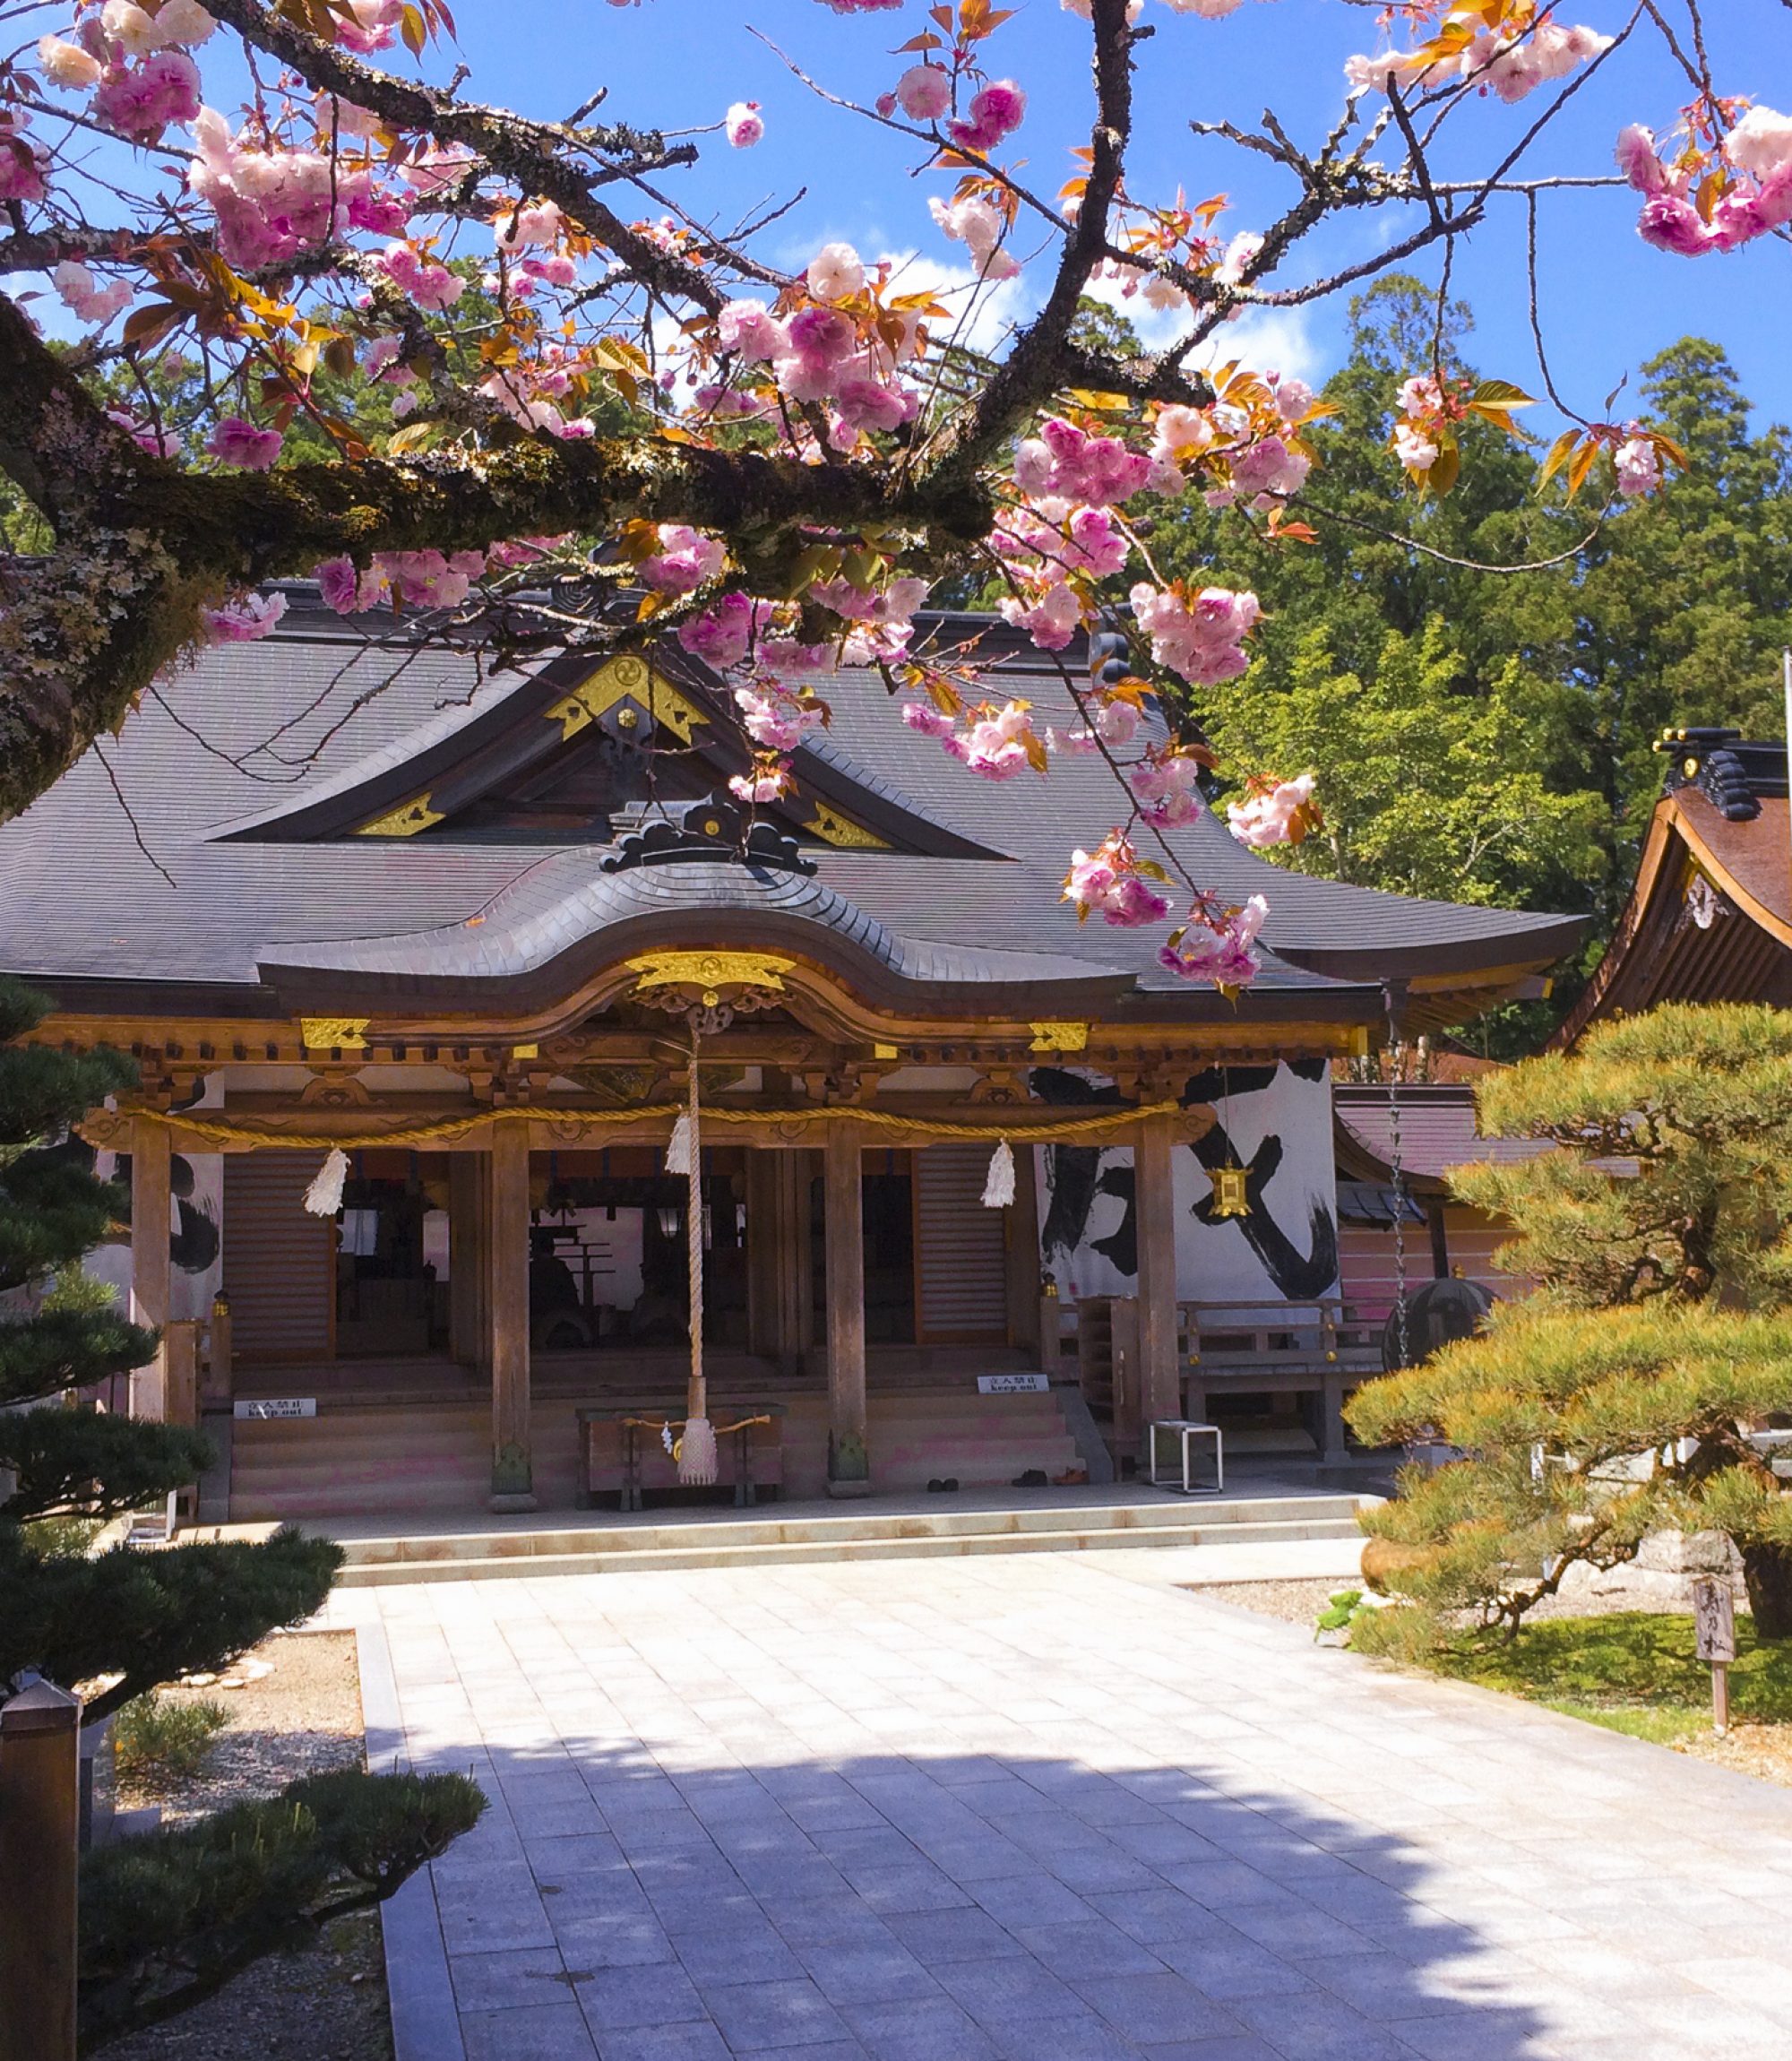 Kumano Kodo Buddhist Temple at the Hongu Taisha Grand Shrine